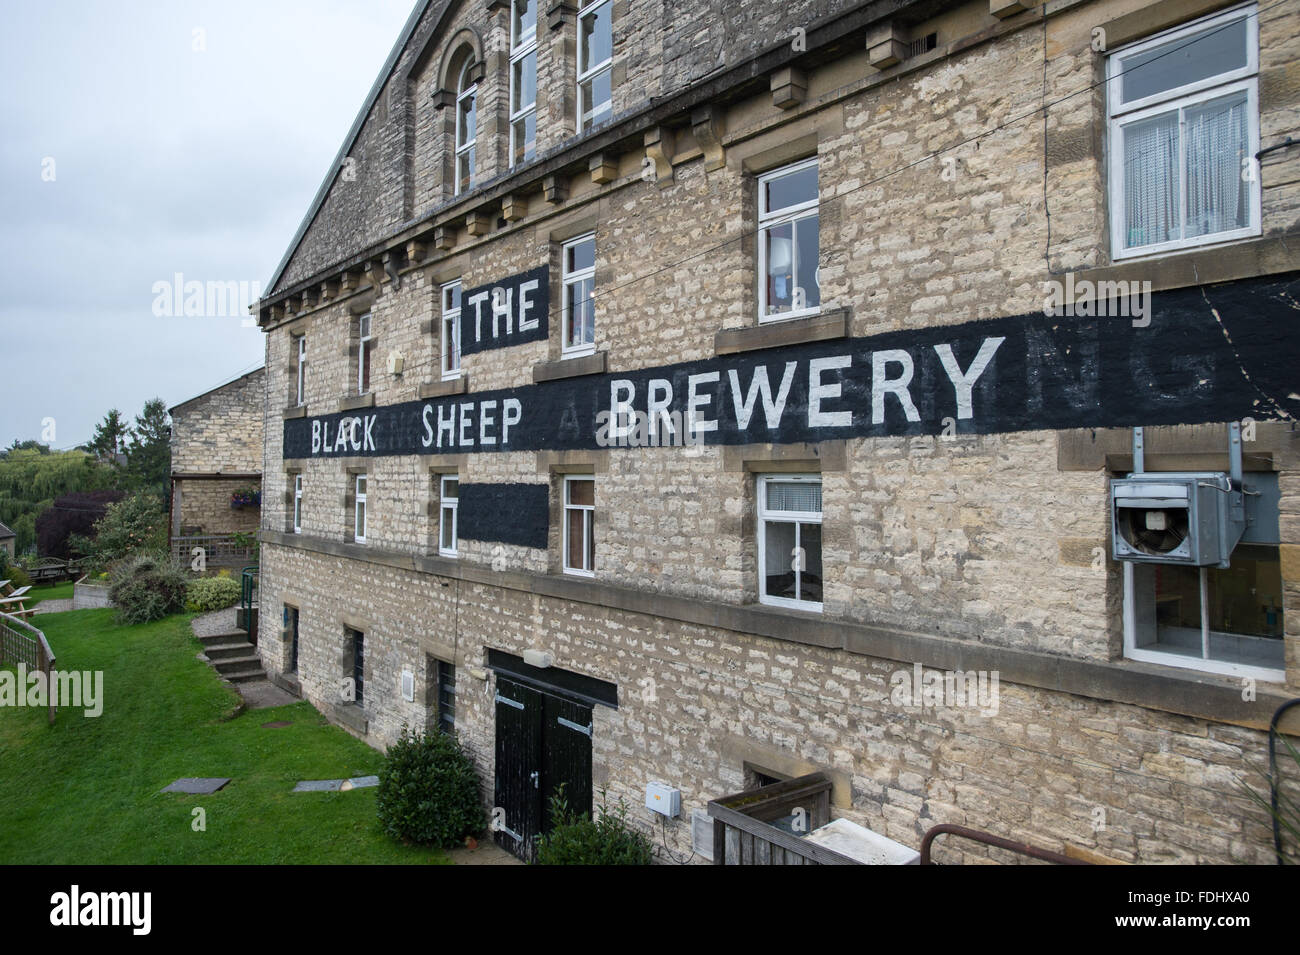 The Black Sheep Brewery in Masham in Yorkshire, England, UK. Stock Photo